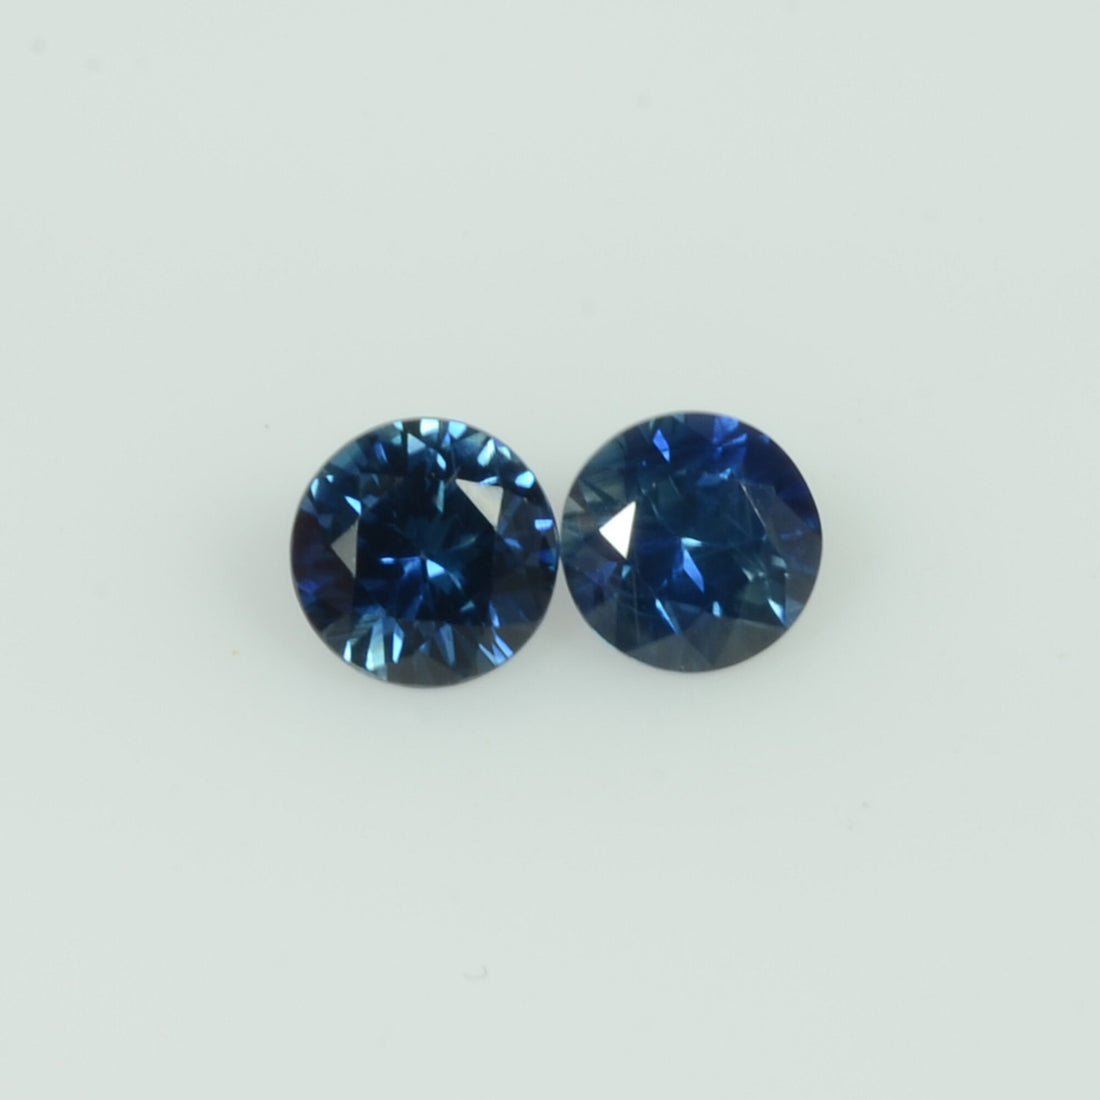 4.3-4.7 mm Natural Blue Sapphire Loose Gemstone Round Diamond Cut Vs Quality Color